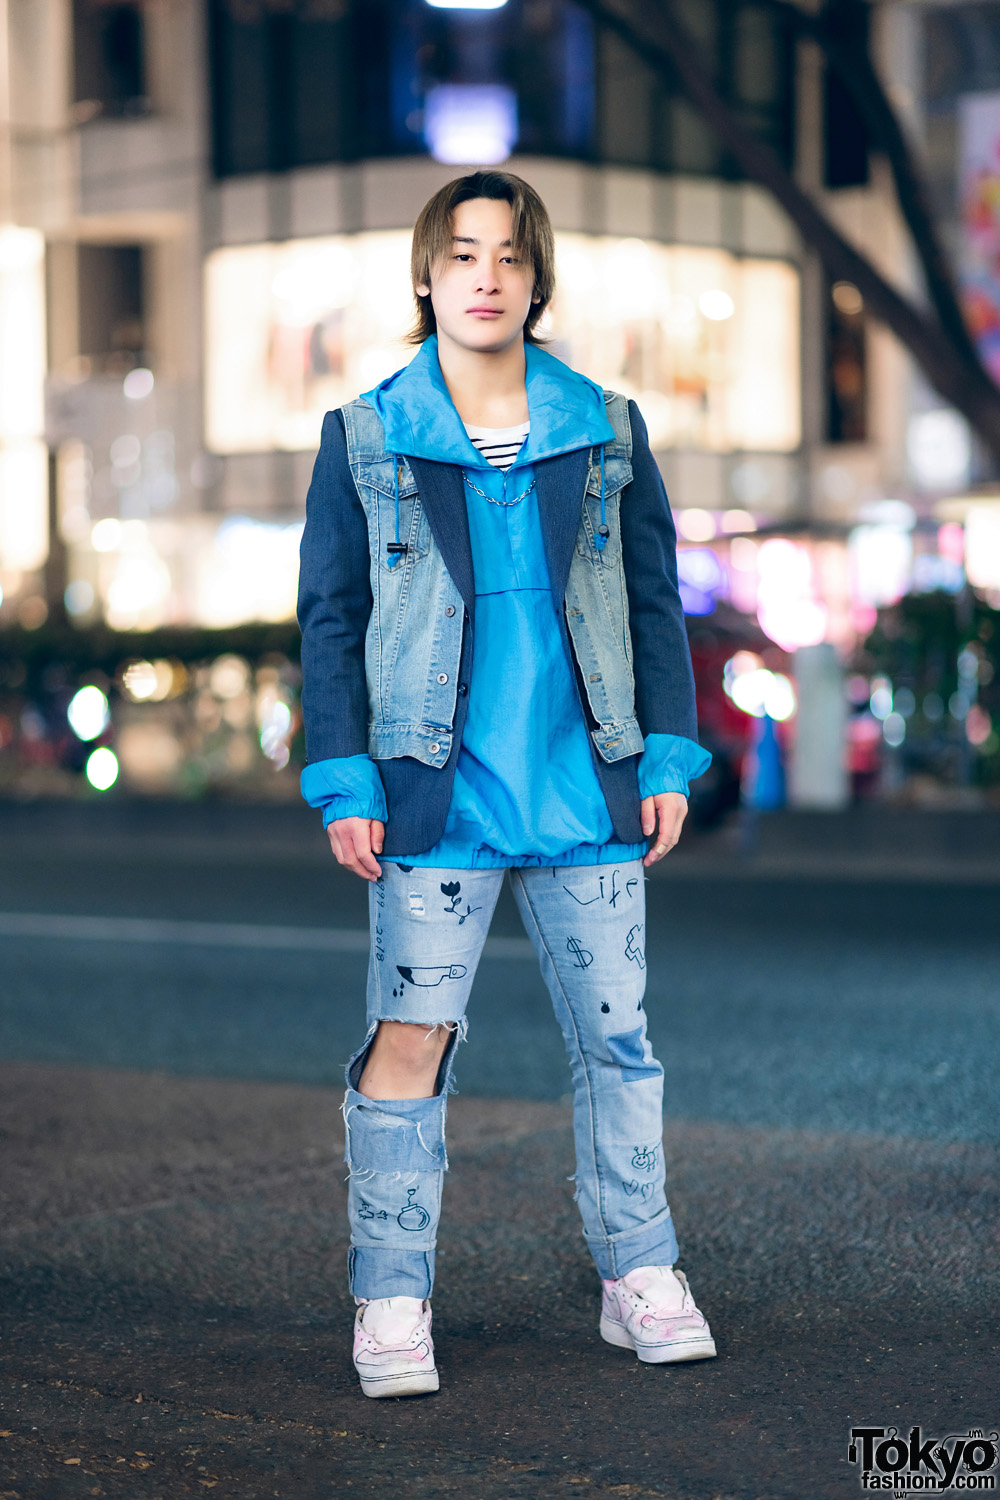 Tokyo Street Style w/ Denim Vest, Hoodie Sweater, Cutout Jeans & Sneakers